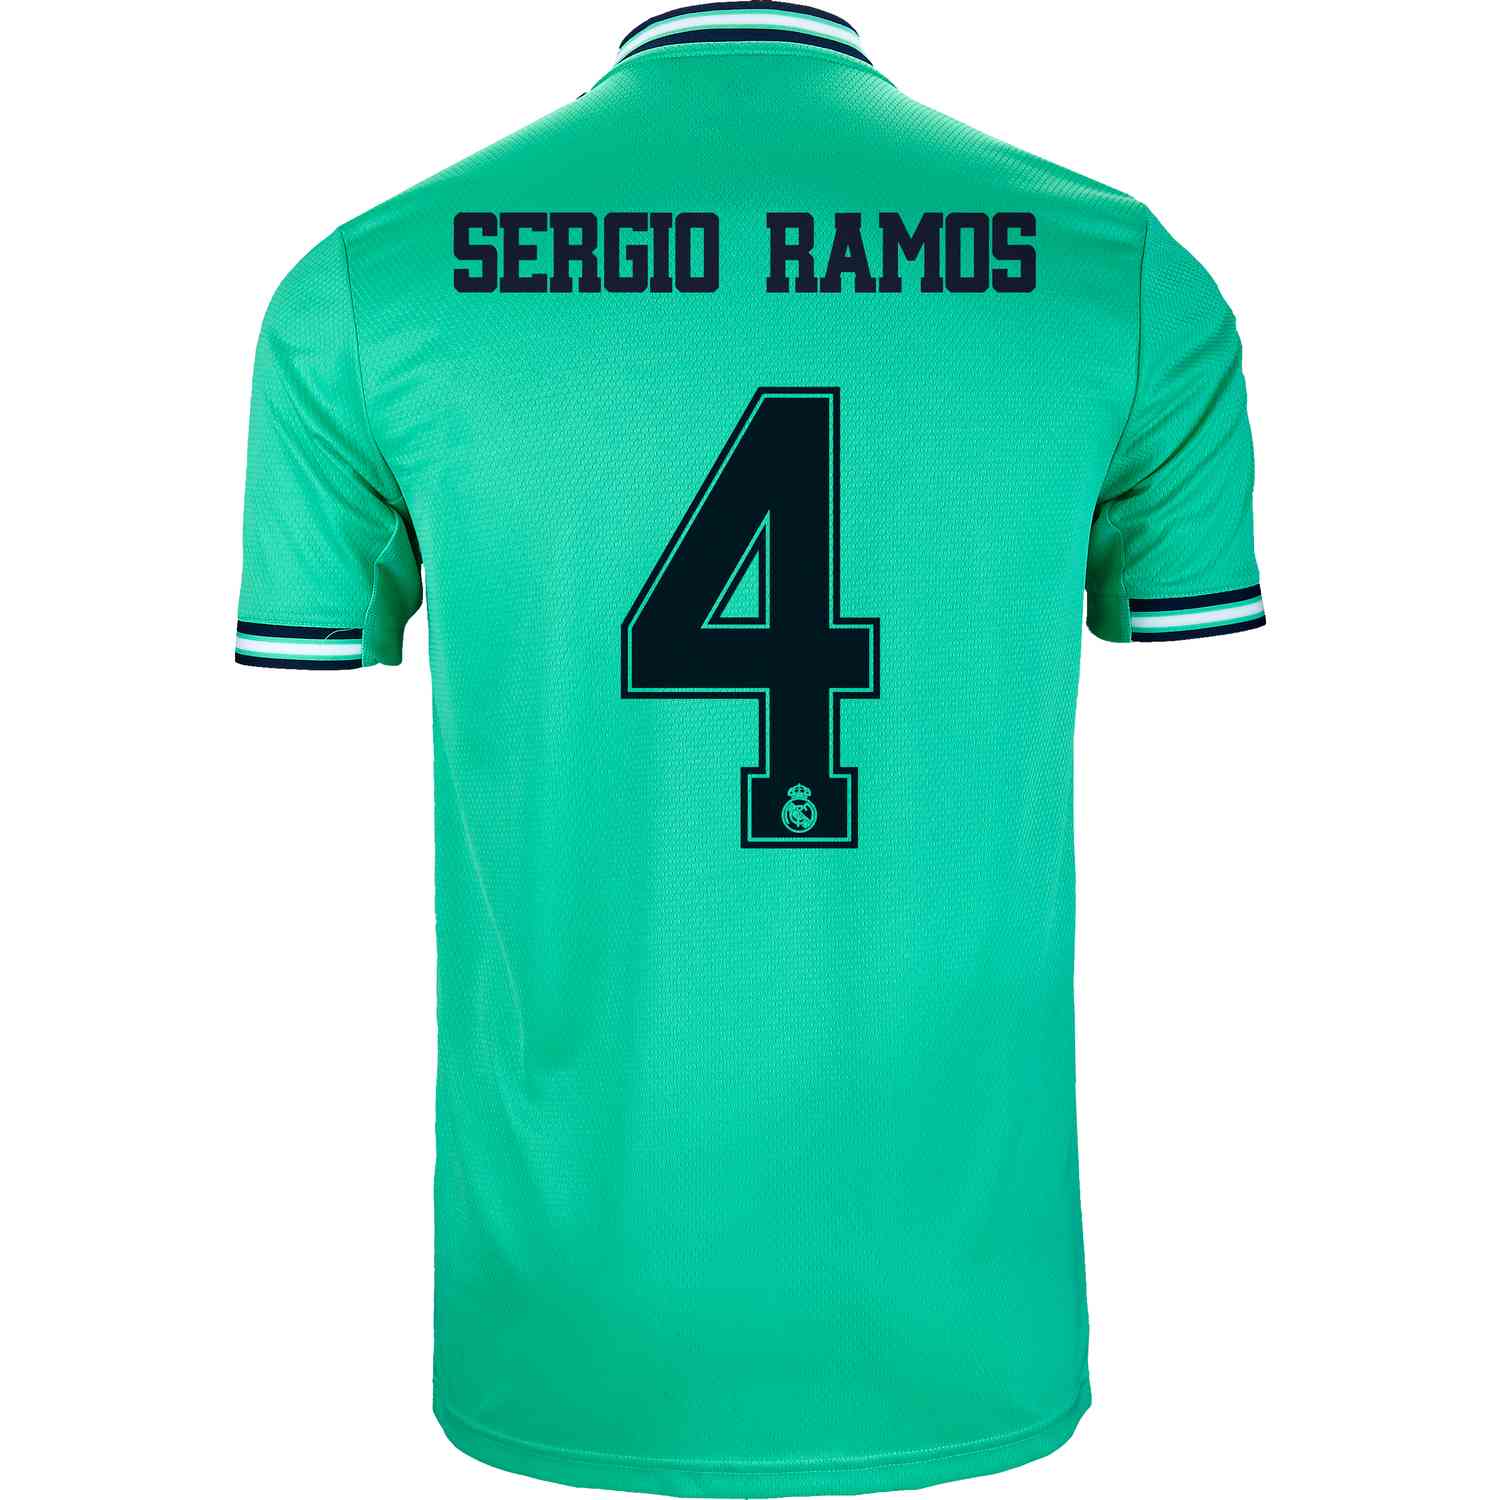 sergio ramos jersey number